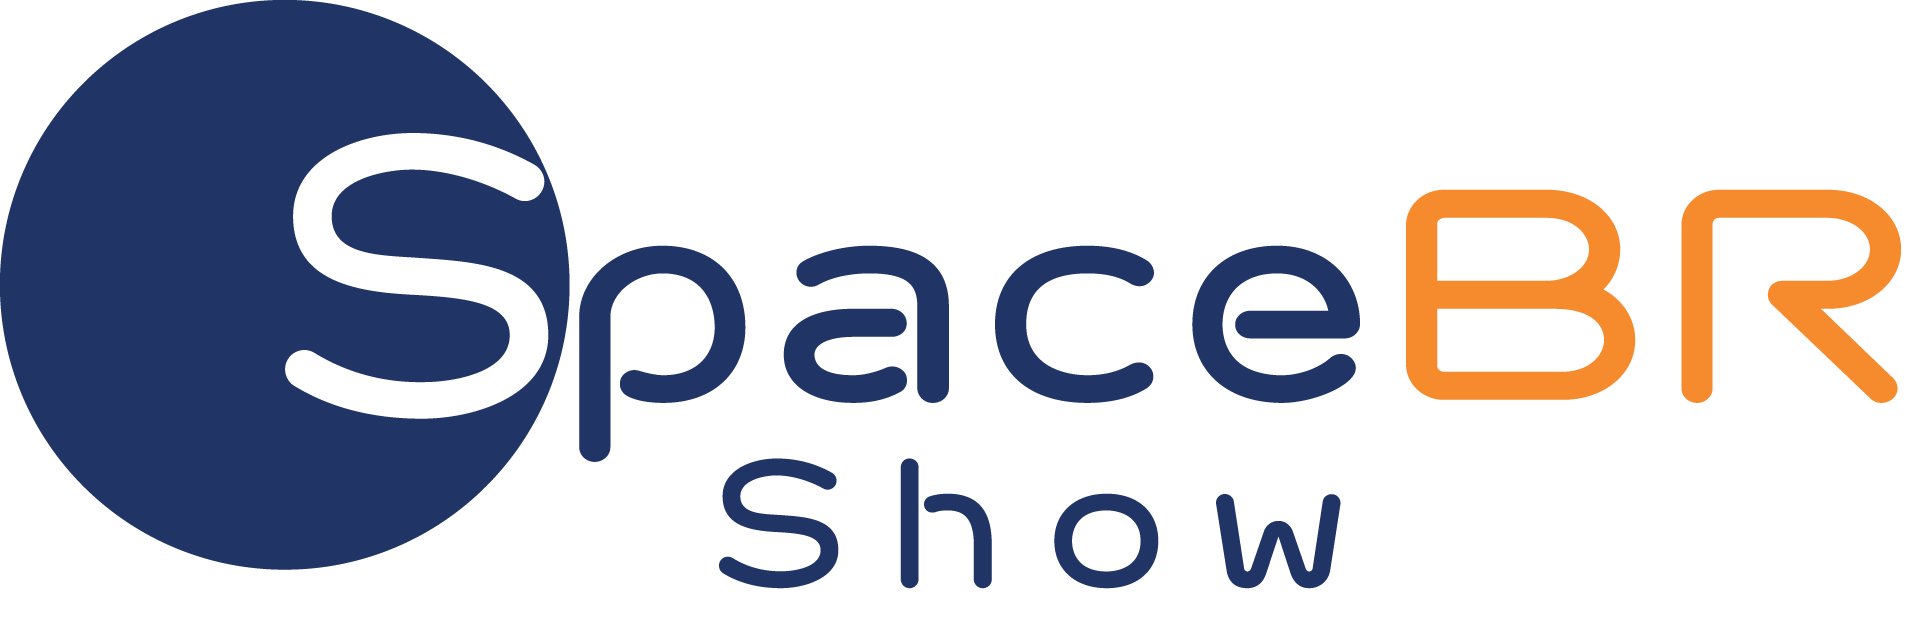 spacebr show.png